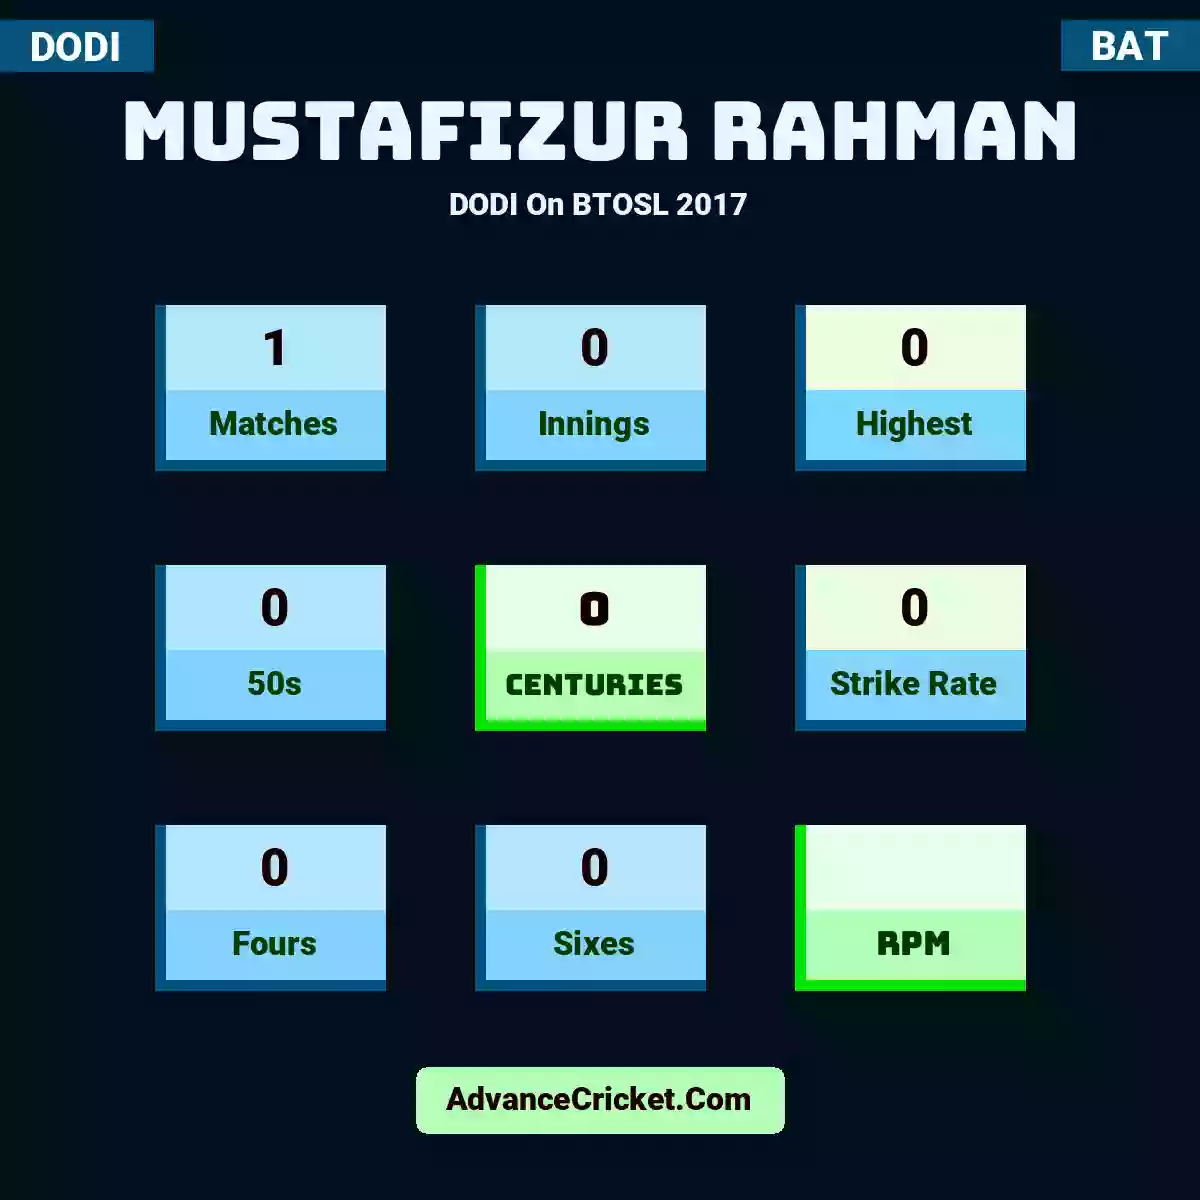 Mustafizur Rahman DODI  On BTOSL 2017, Mustafizur Rahman played 1 matches, scored 0 runs as highest, 0 half-centuries, and 0 centuries, with a strike rate of 0. M.Rahman hit 0 fours and 0 sixes.